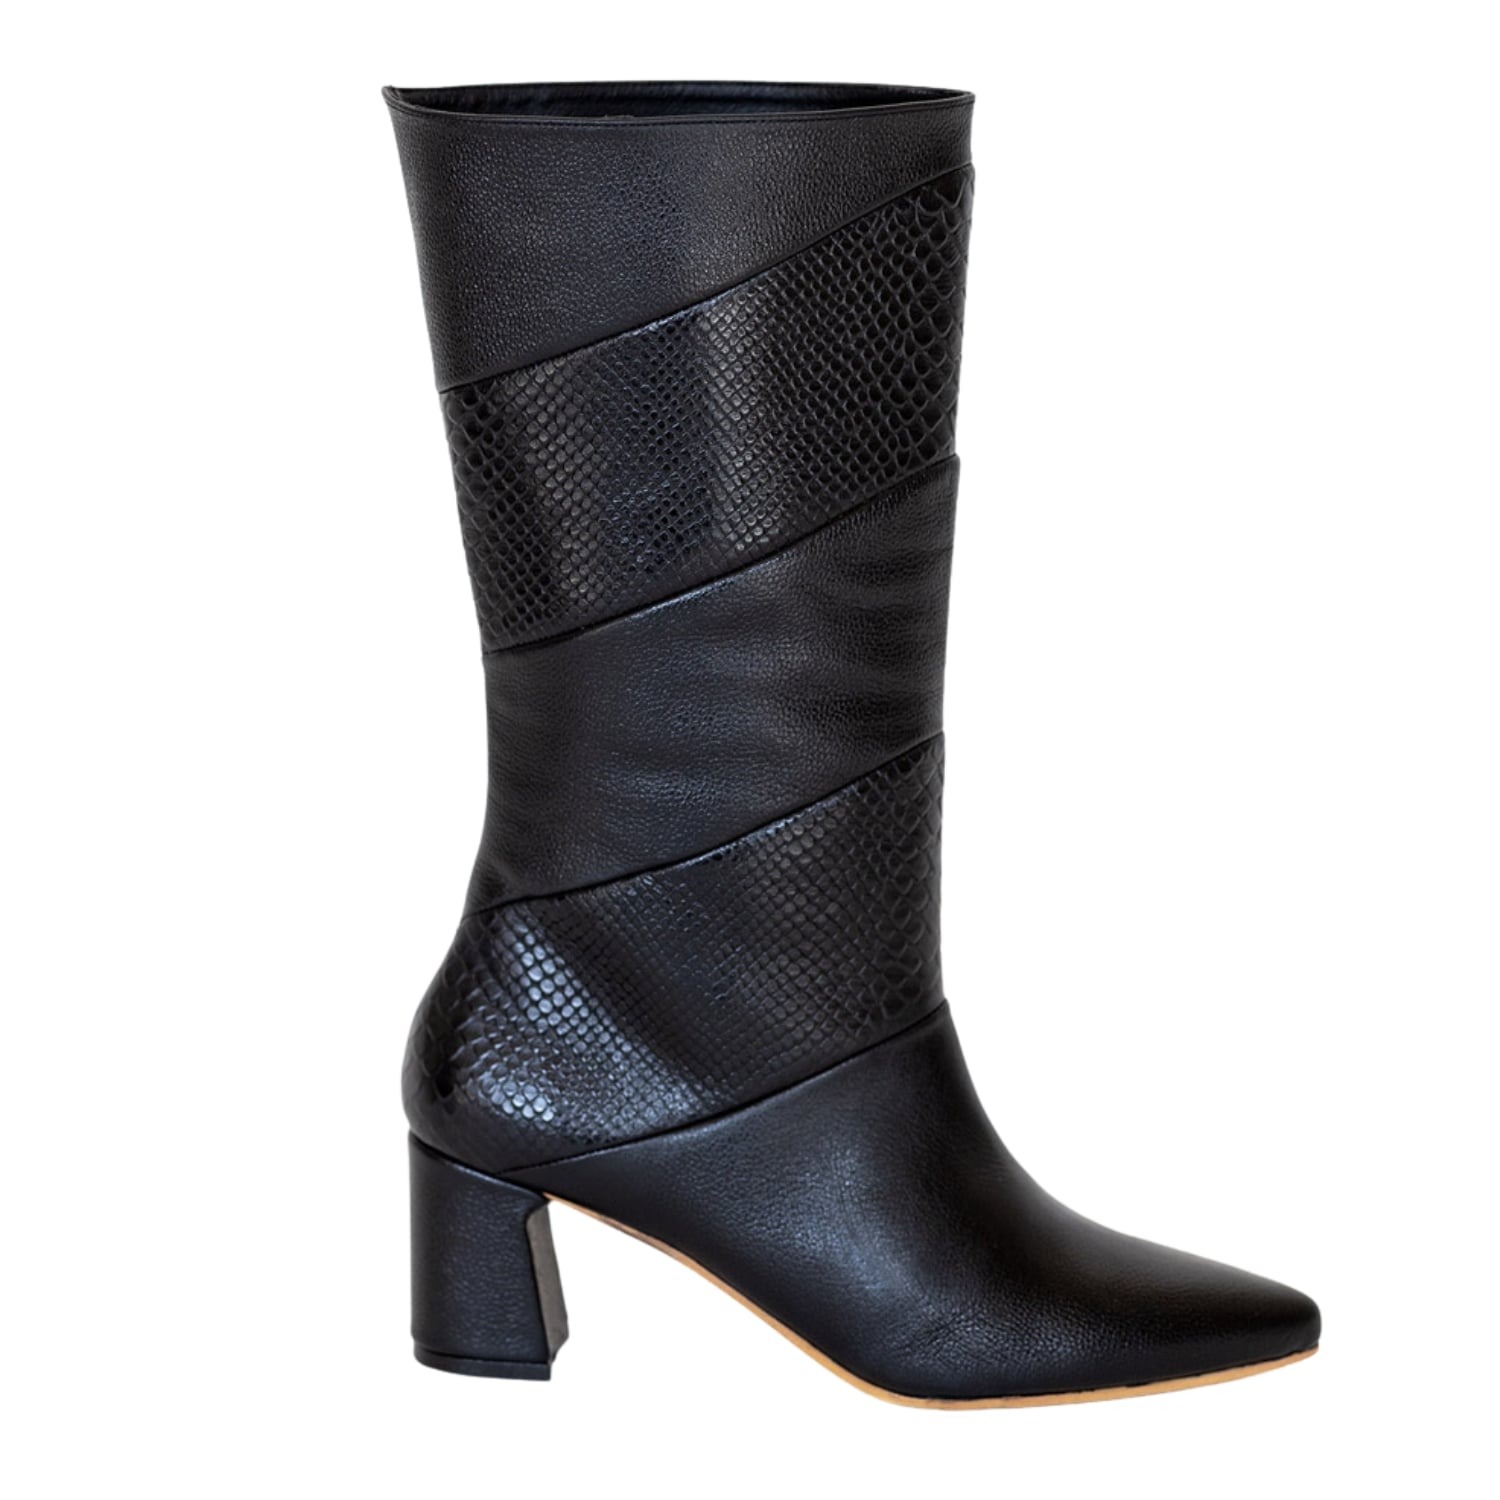 Women’s Ela Boots In Black & Black Croc Embossed Leather 4 Uk Stivali New York